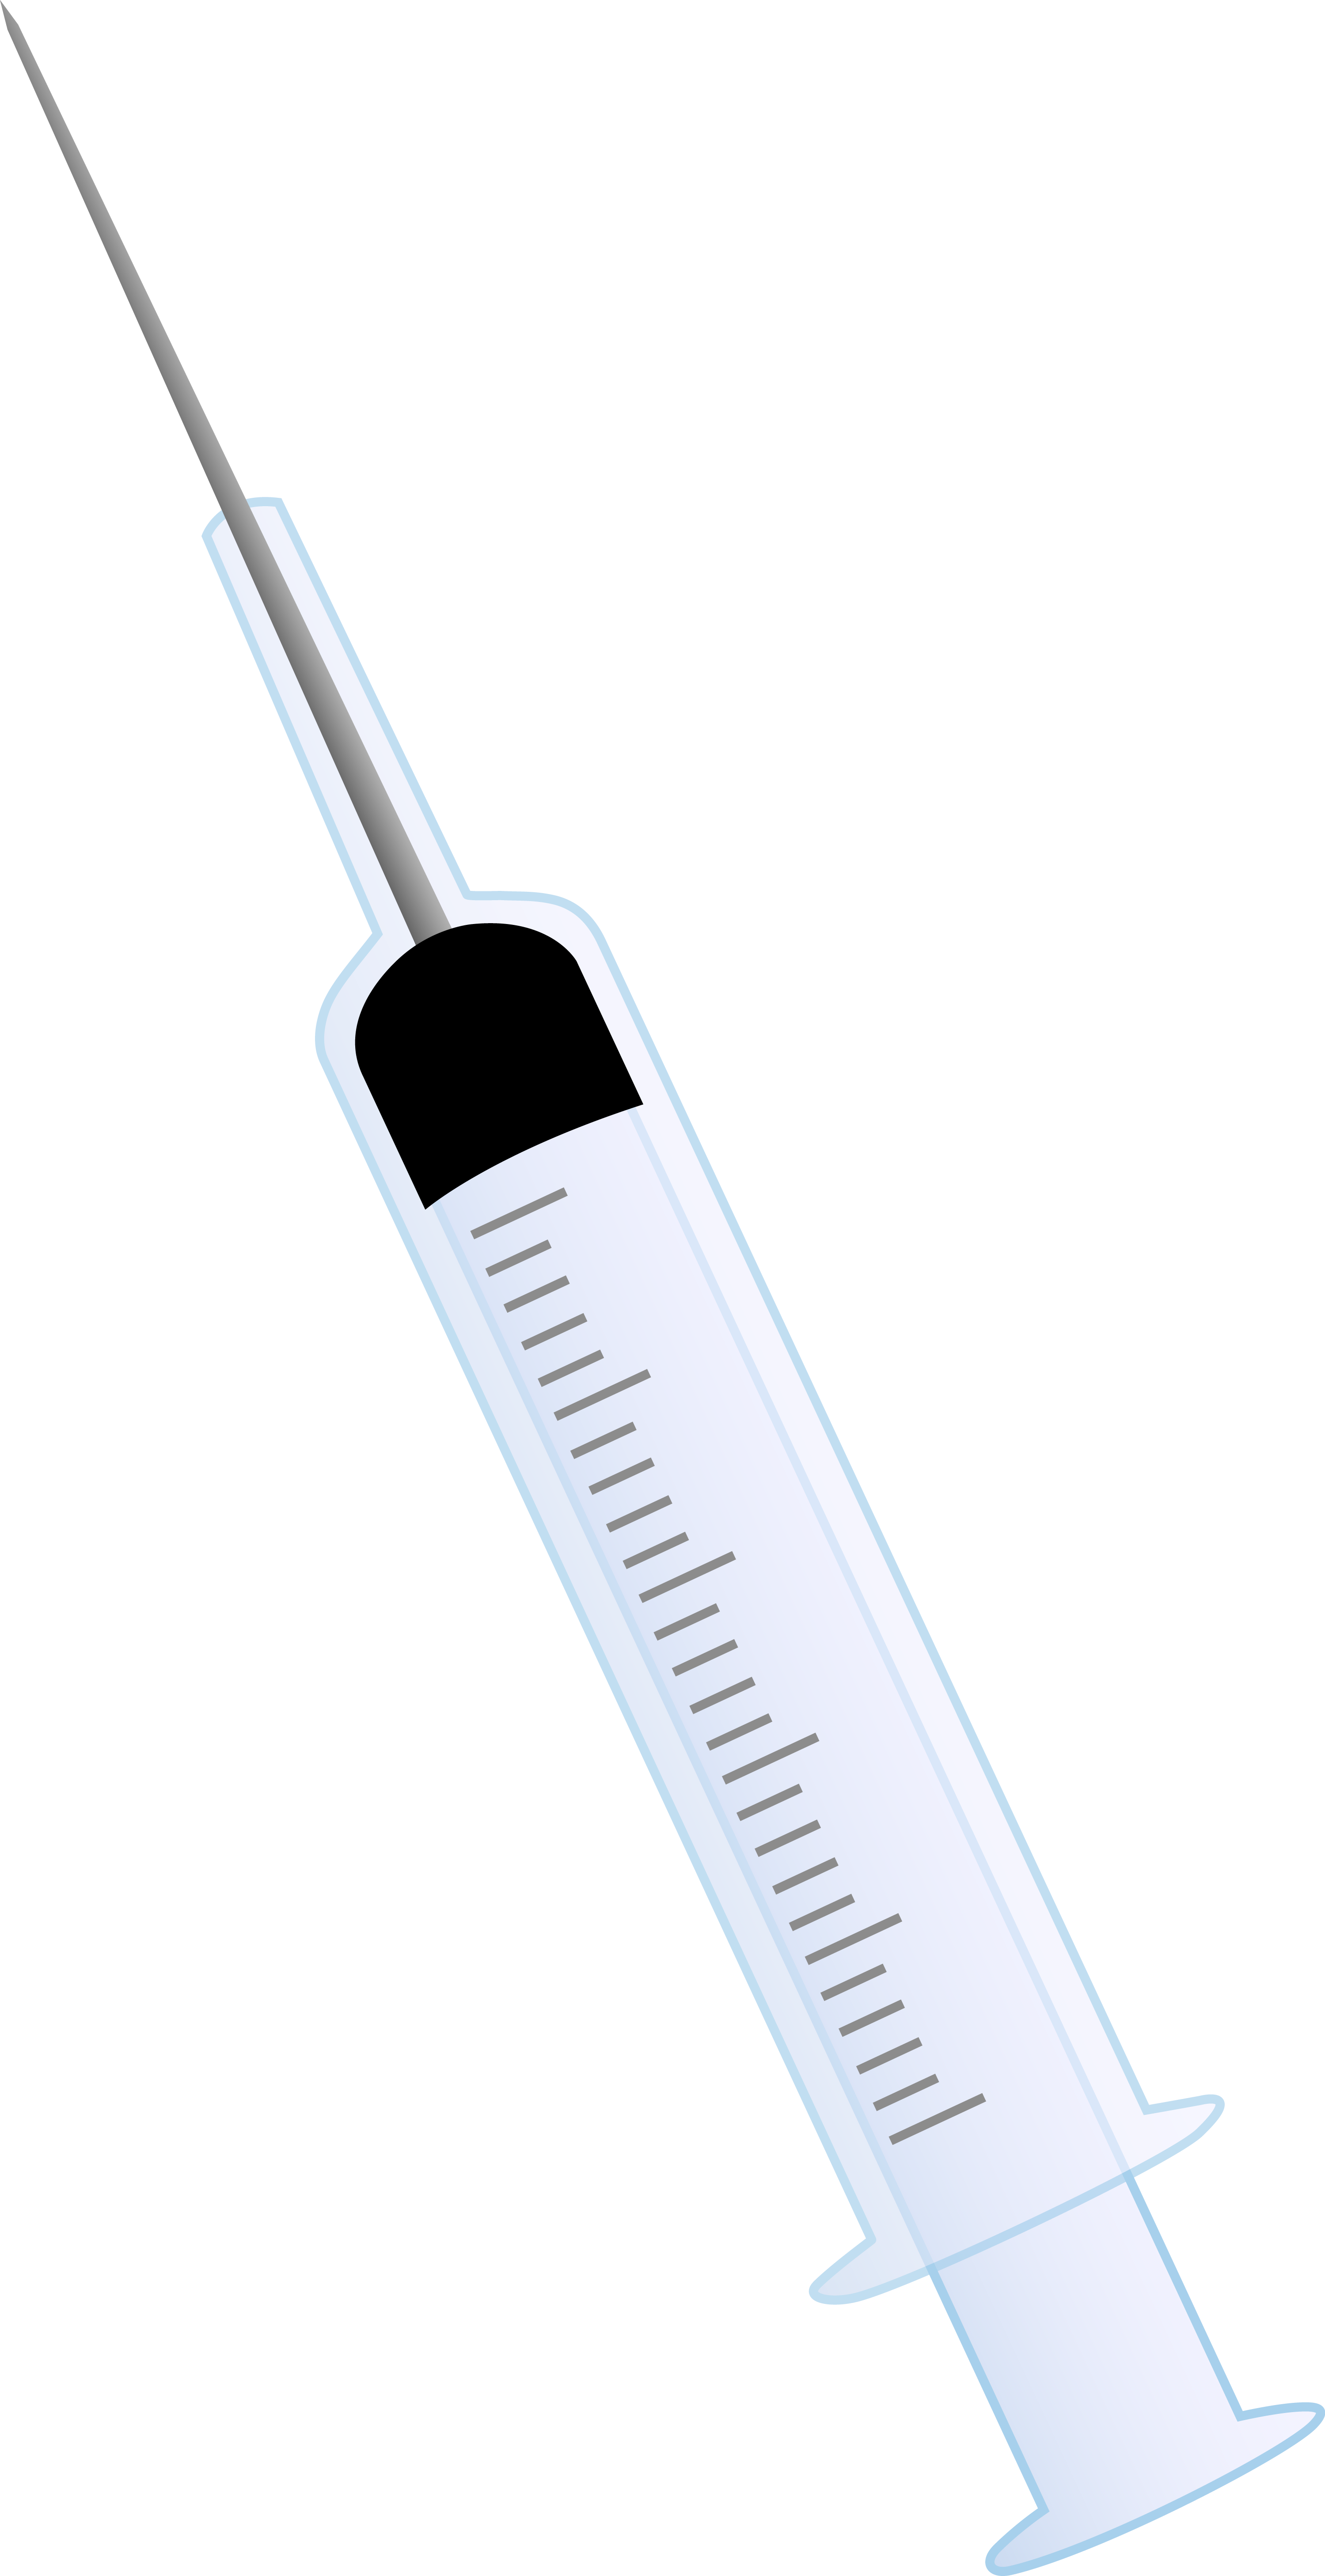 Syringe free clip art. Medical clipart vector